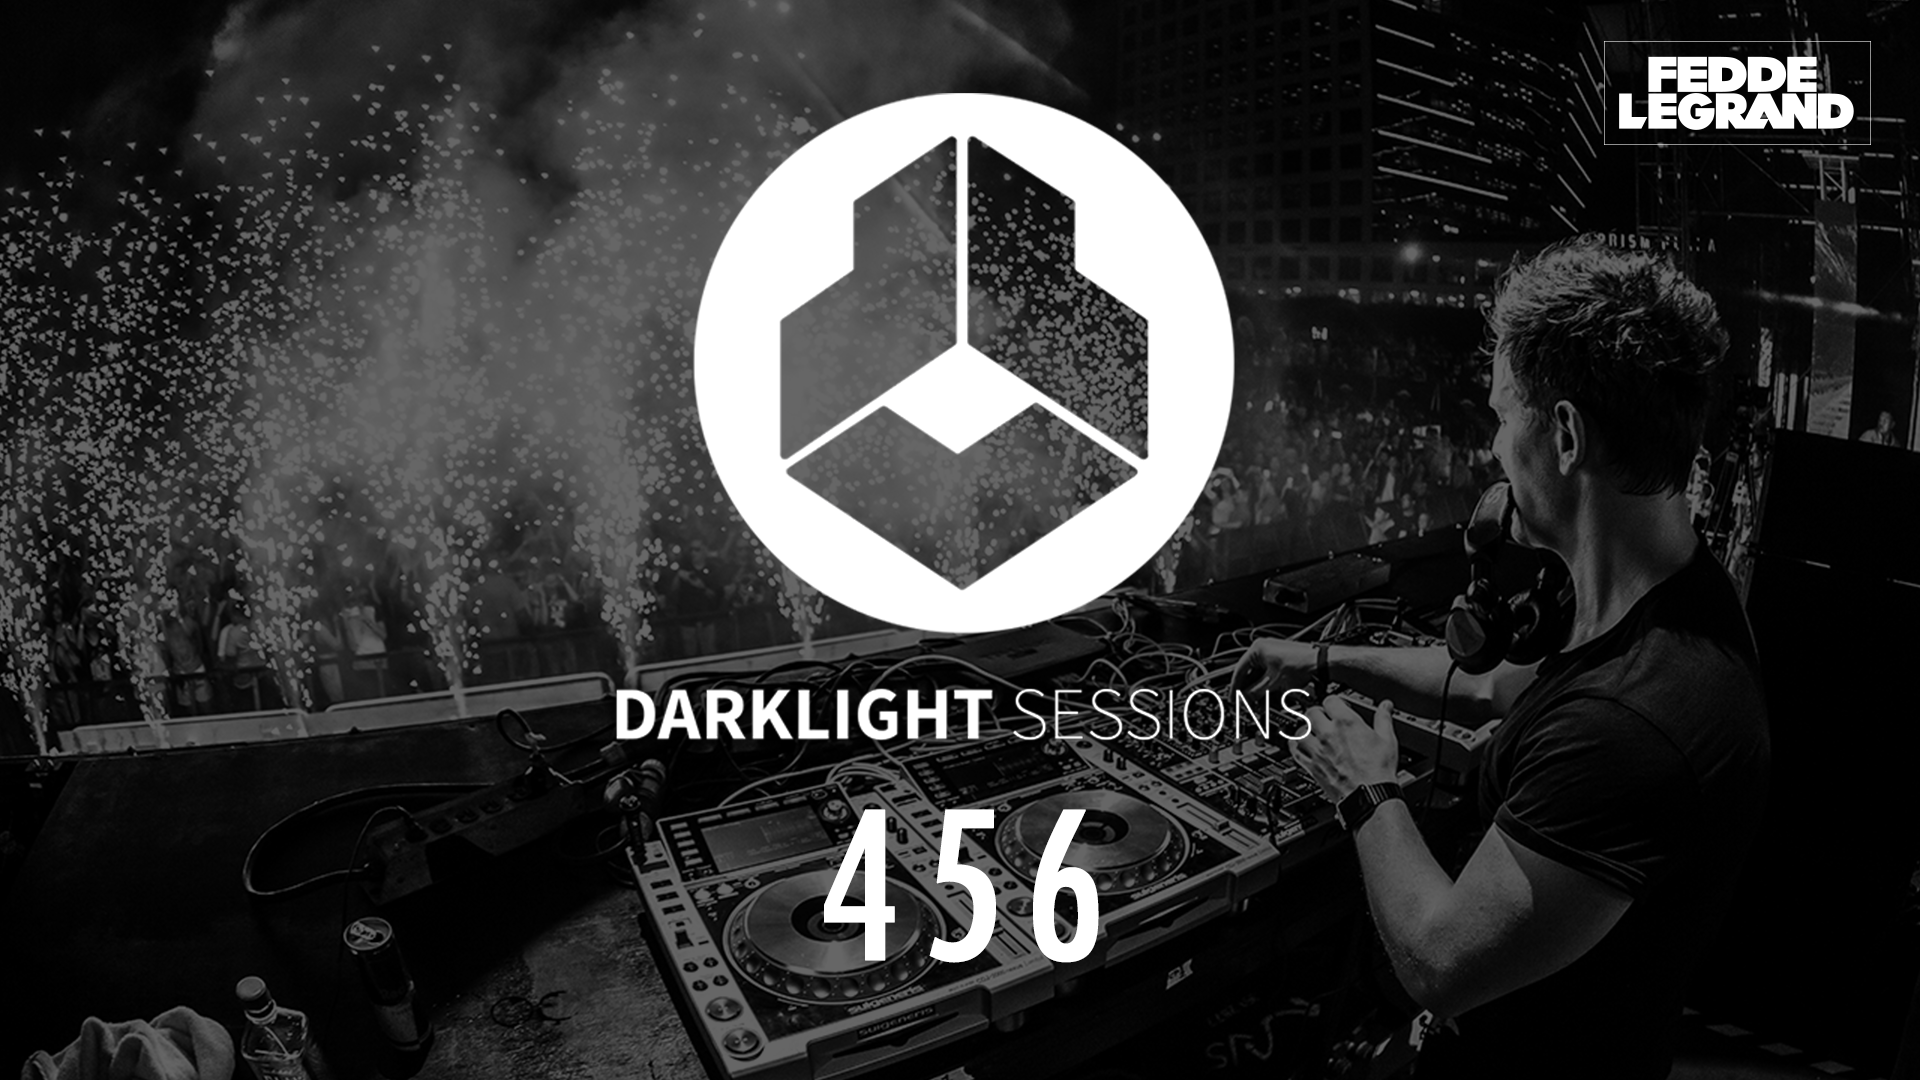 Darklight Sessions 456